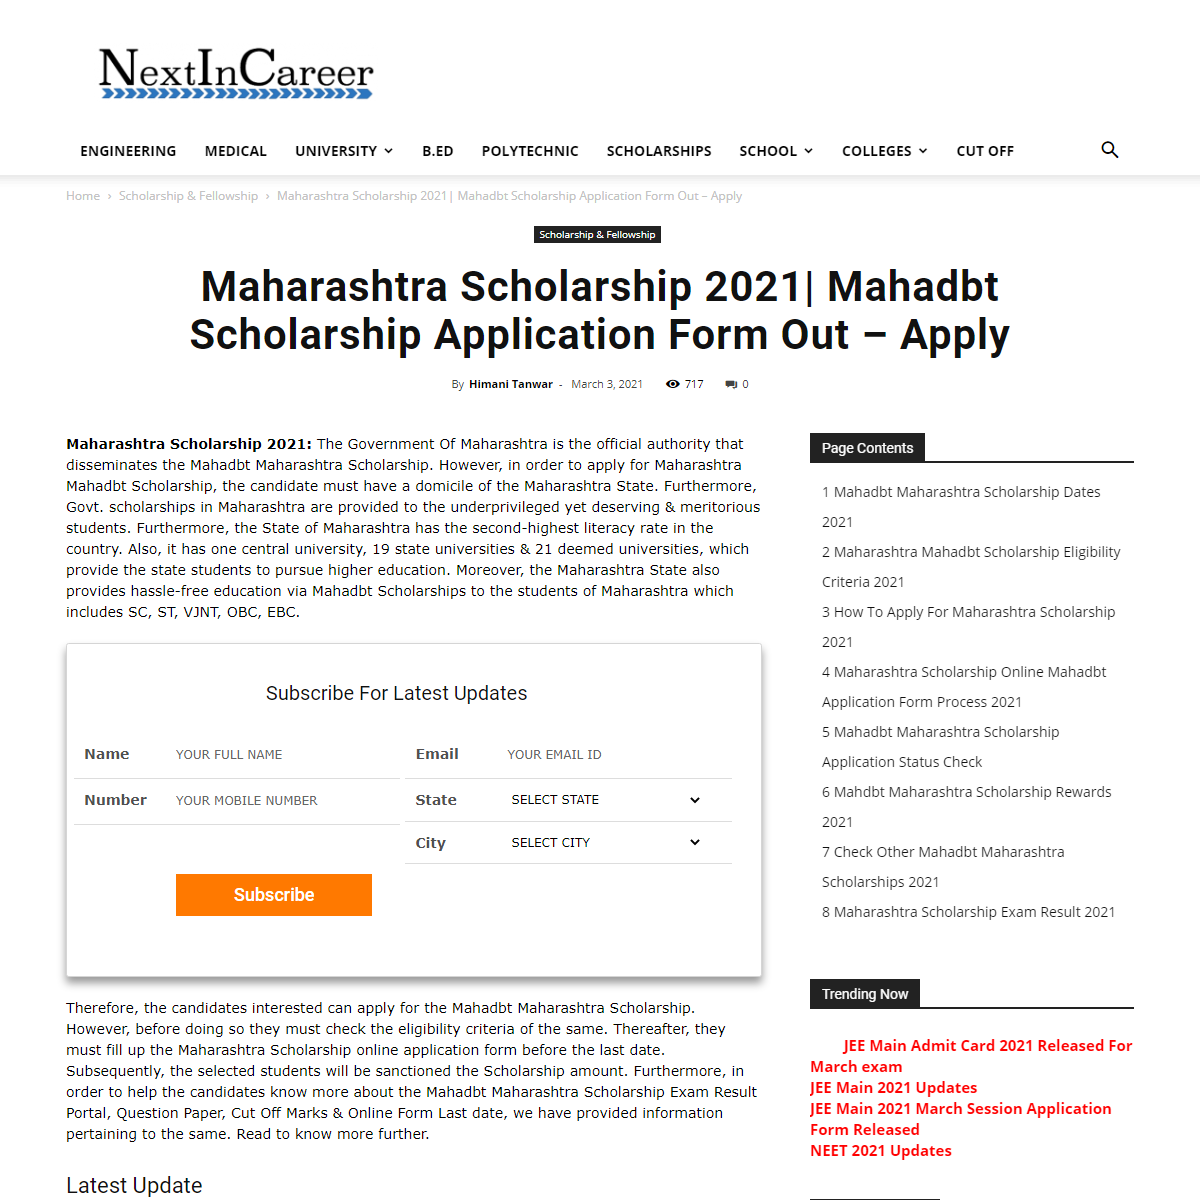 A complete backup of https://nextincareer.com/maharashtra-scholarship/